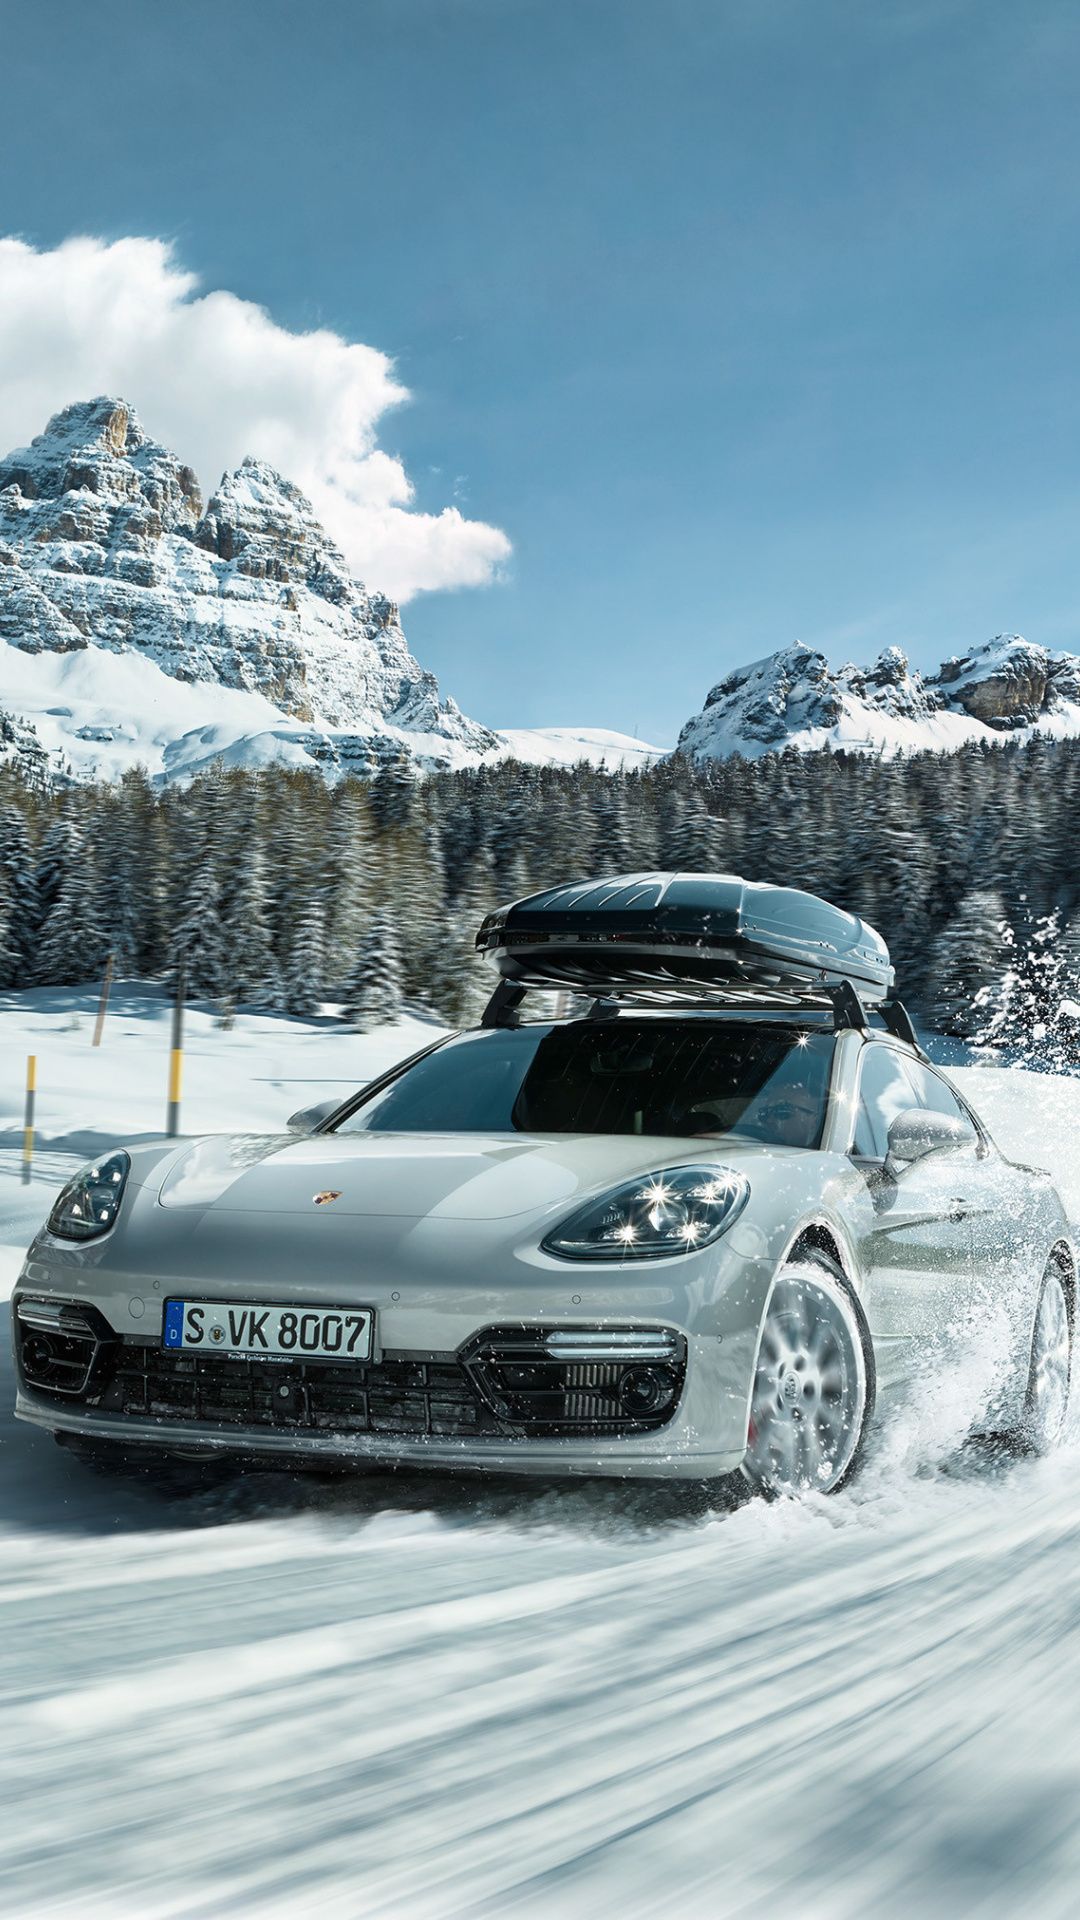 Porsche, Sports Car, Off Road, Snow, 1080x1920 Wallpaper. Porsche, Sports Cars Luxury, Touring Car Racing